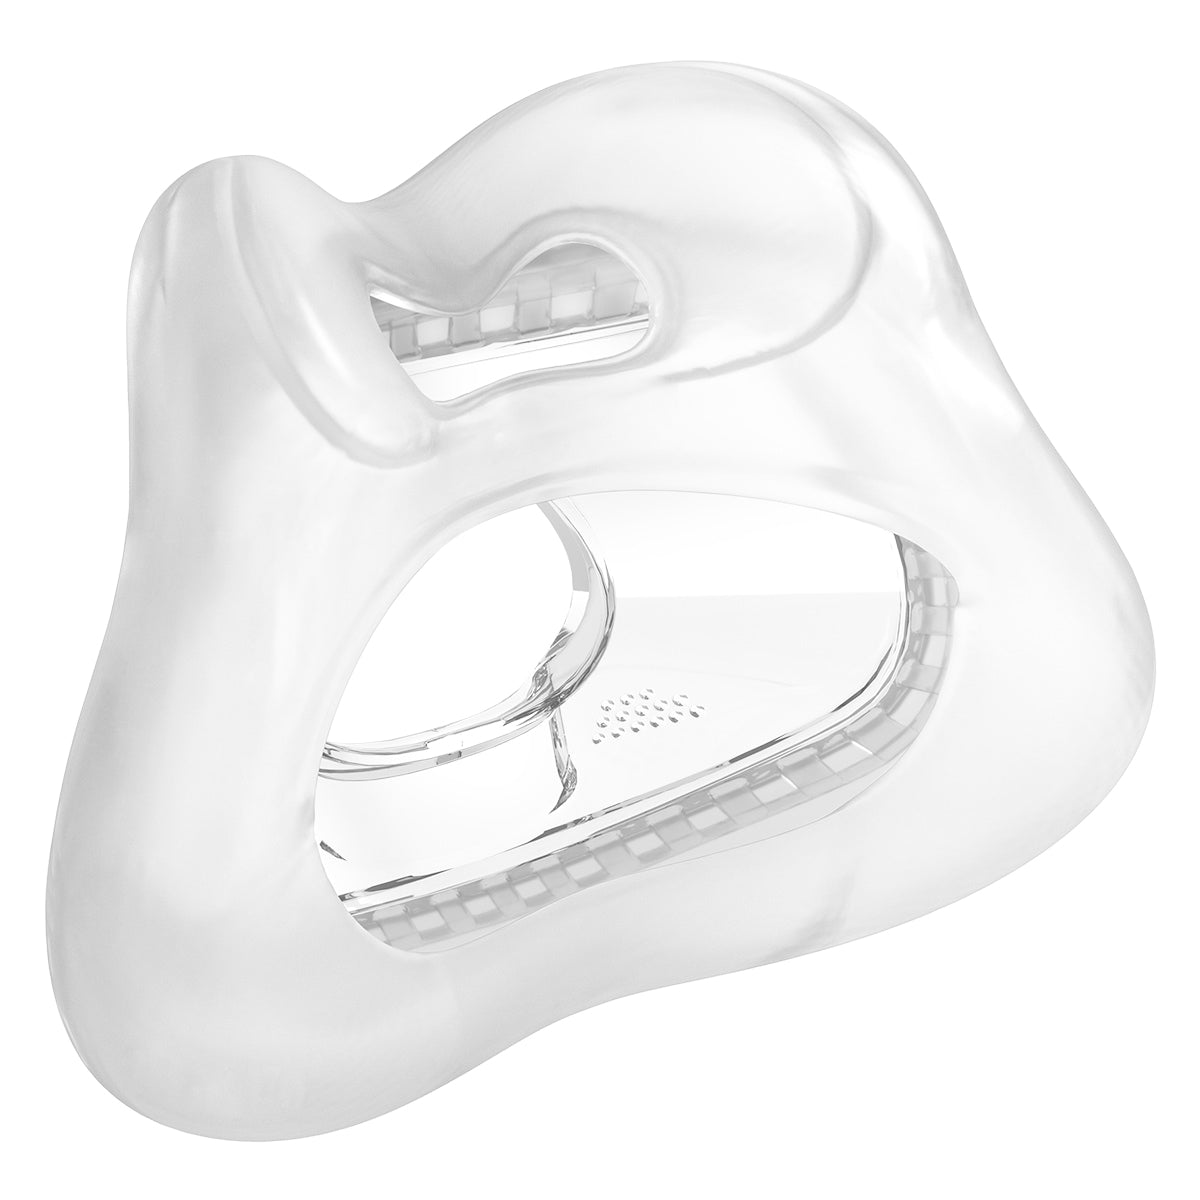 Full Face Cushion (Seal) for Evora CPAP/BiPAP Masks